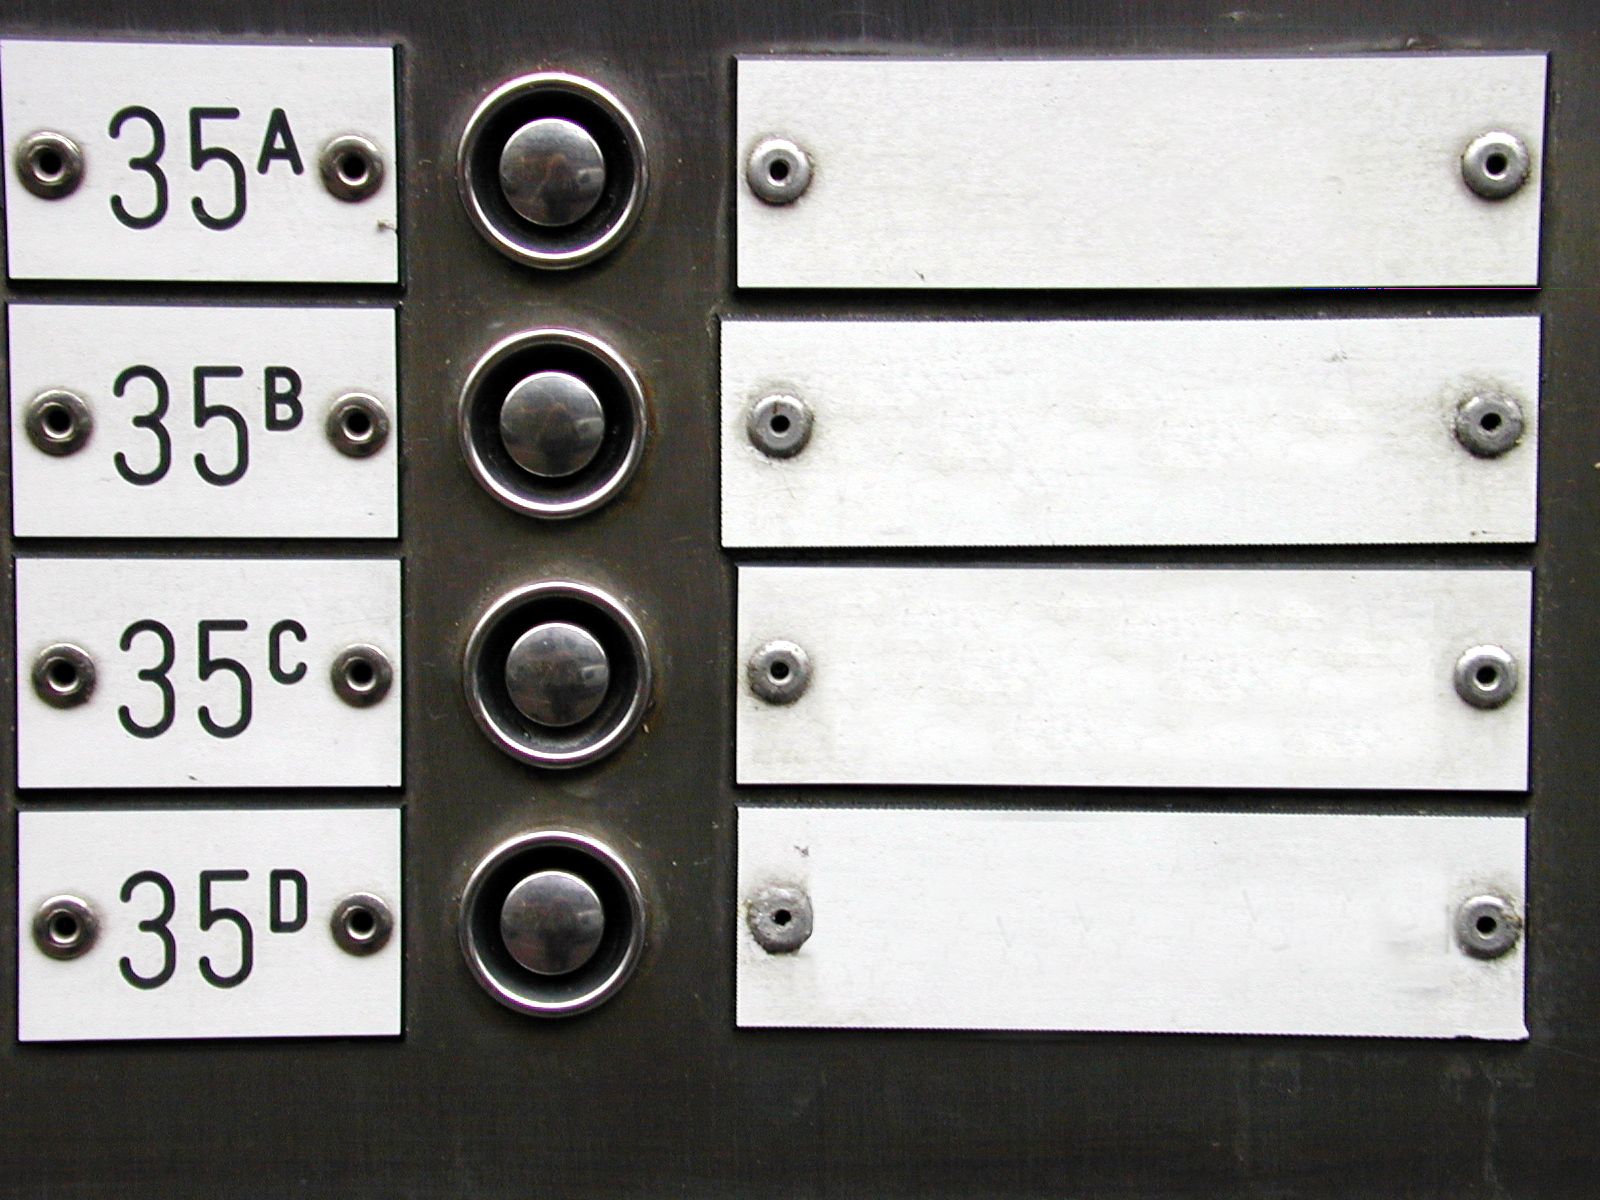 doorbells houses numbers name tags plates